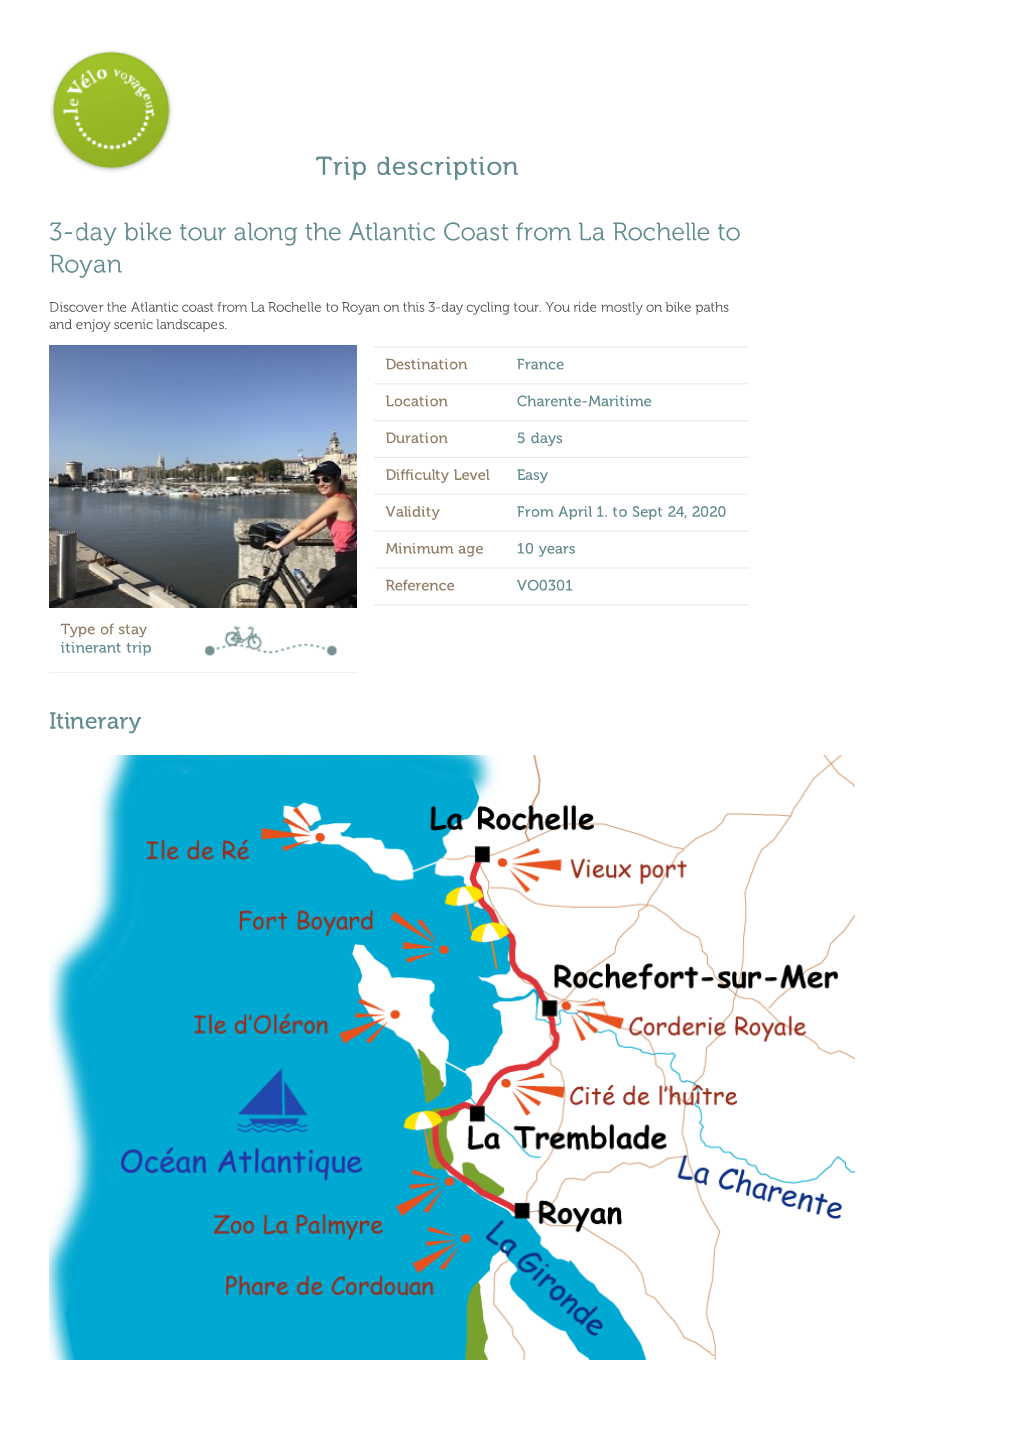 Trip Description 3-Day Bike Tour Along the Atlantic Coast from La Rochelle to Royan